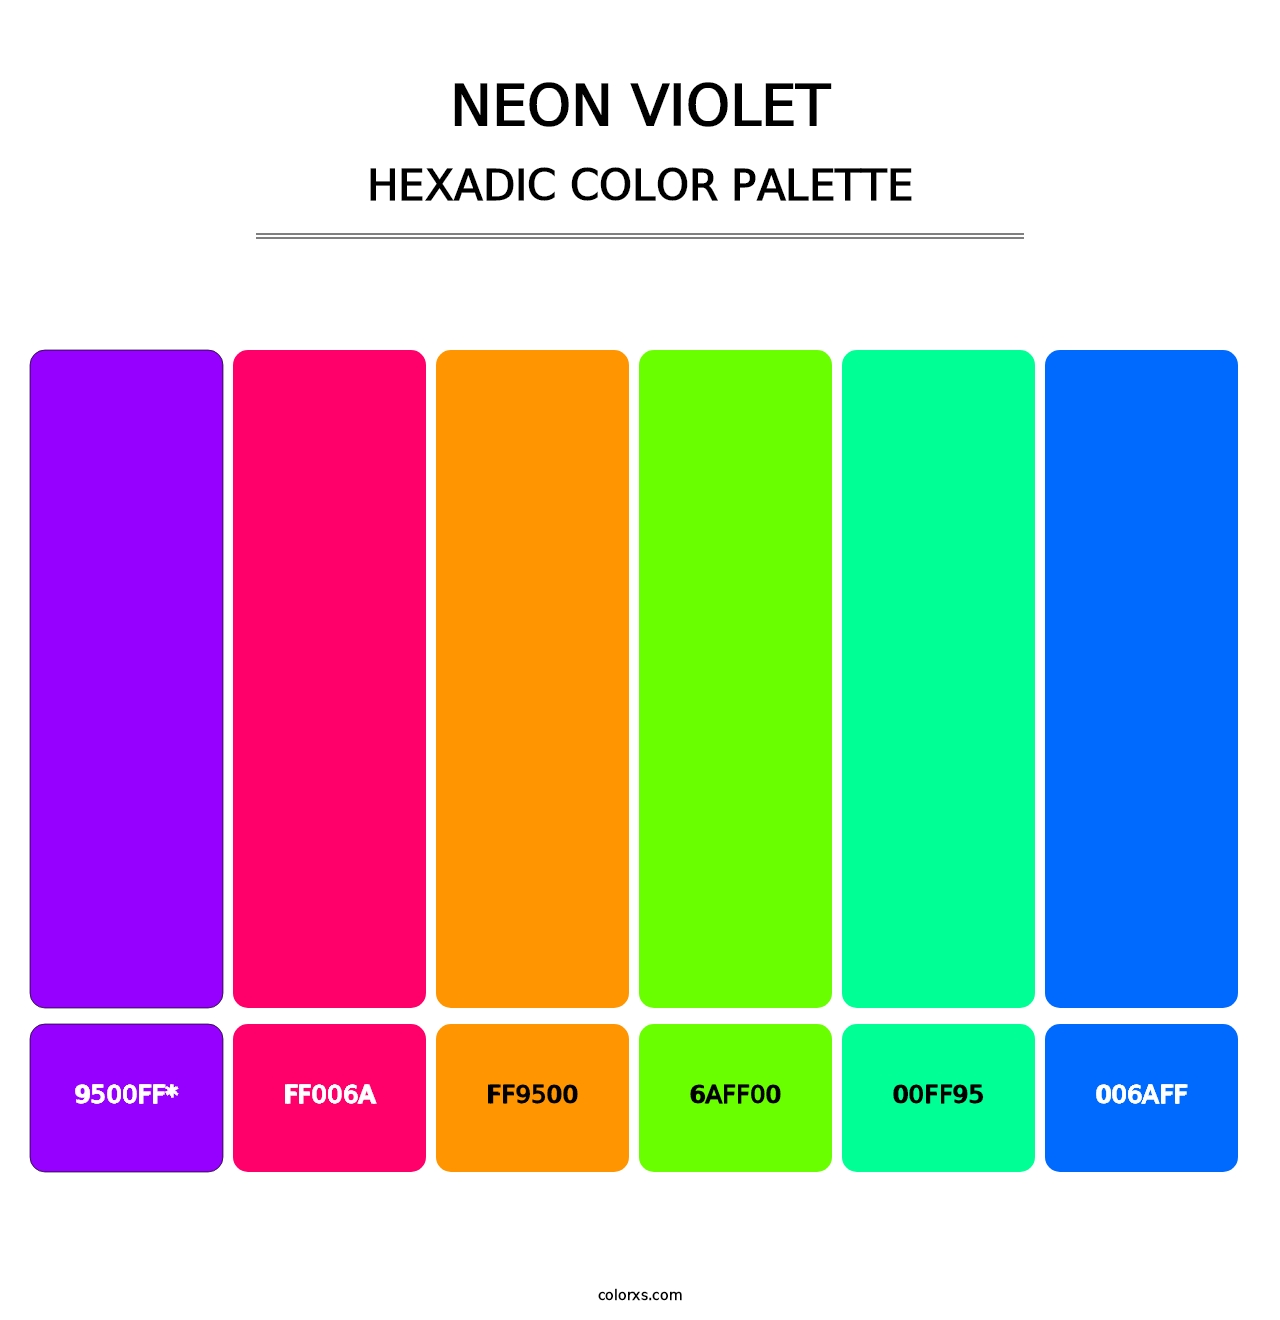 Neon Violet - Hexadic Color Palette